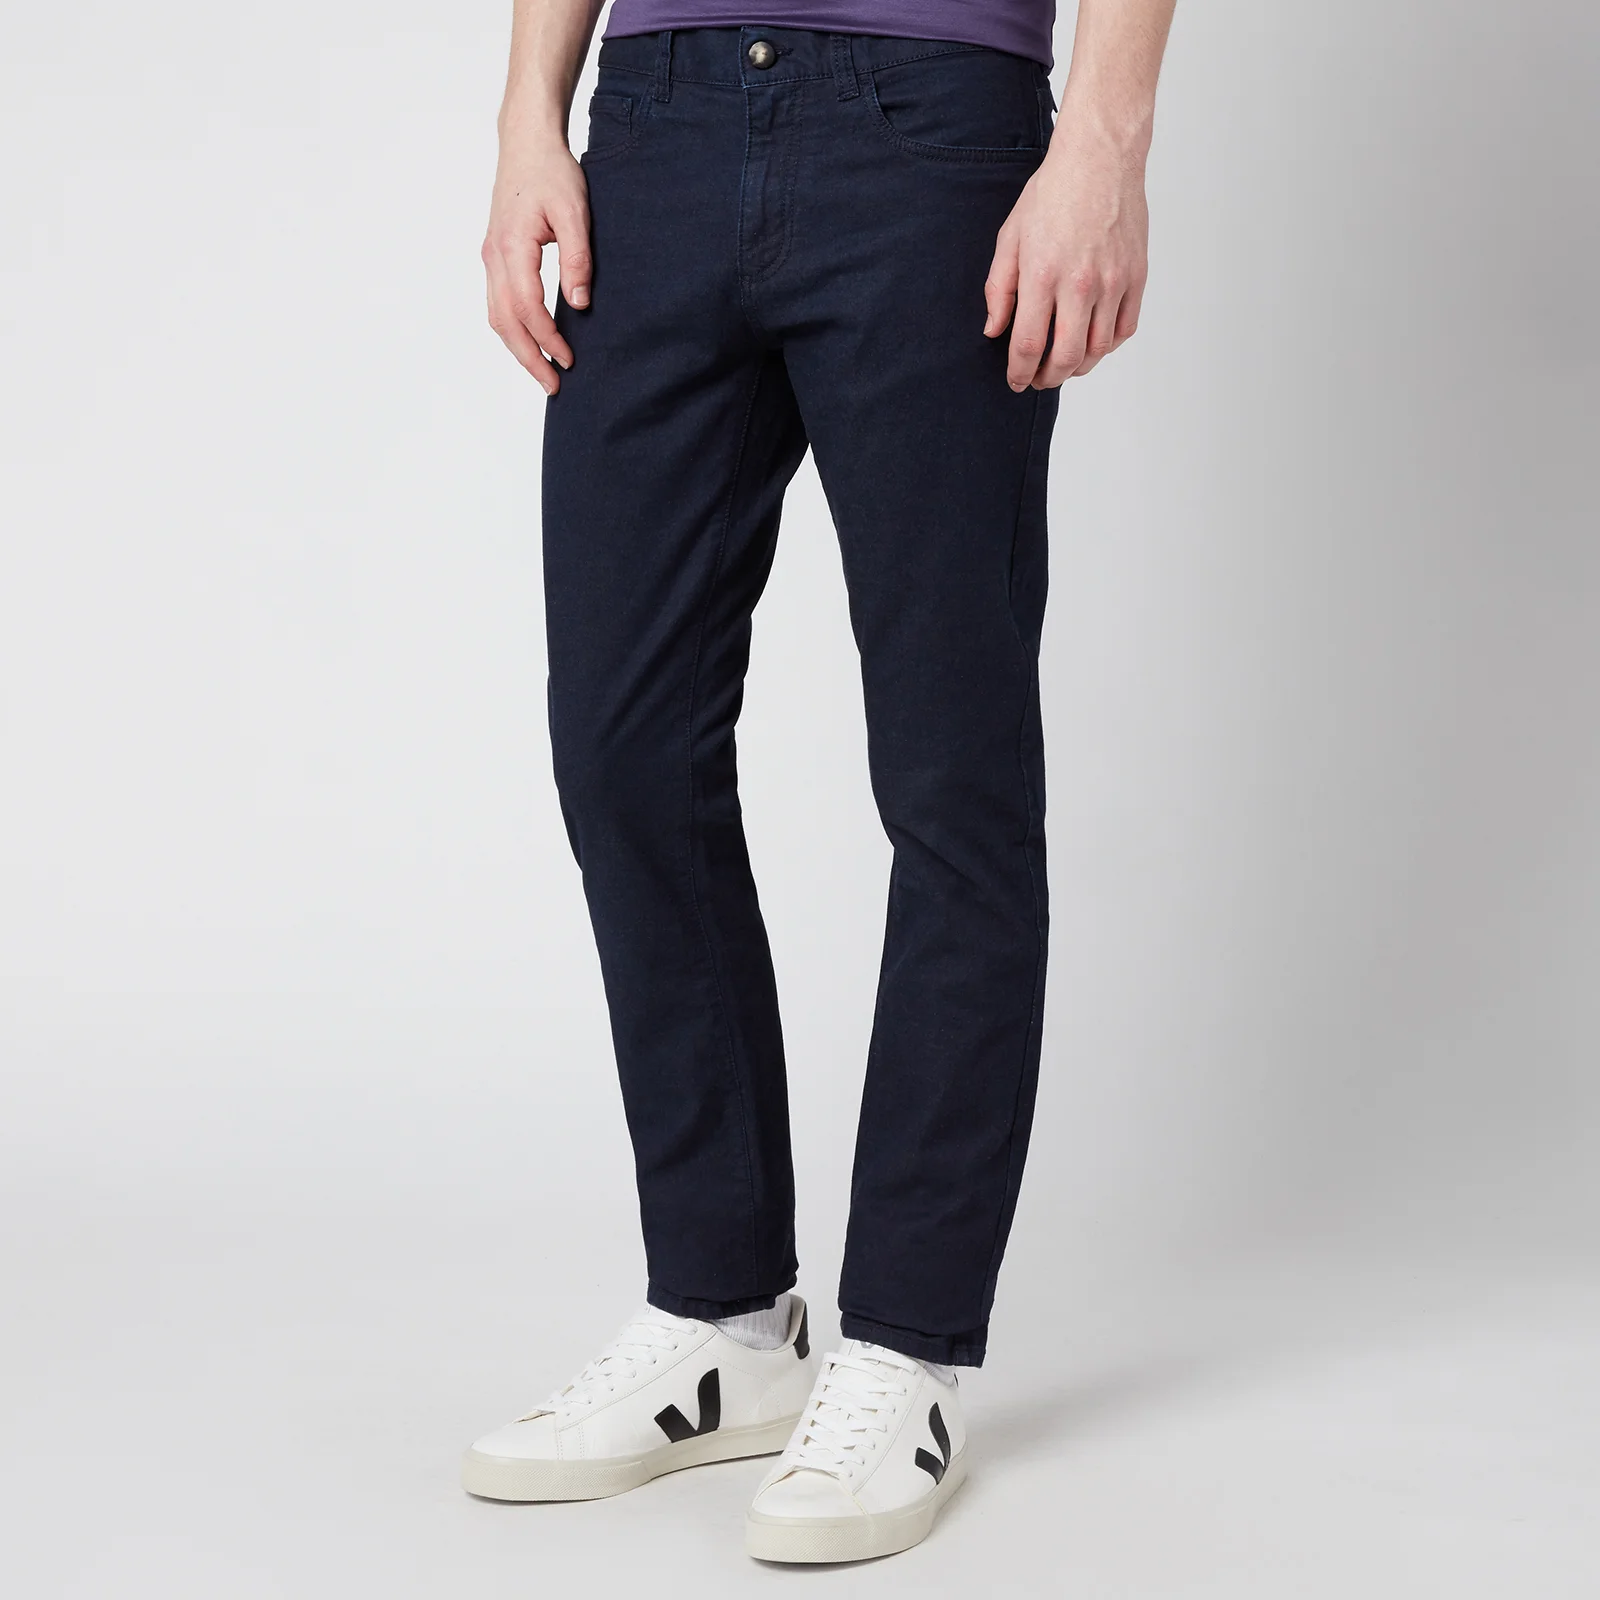 Canali Men's Denim Comfort Stretch Jeans - Dark Denim Image 1